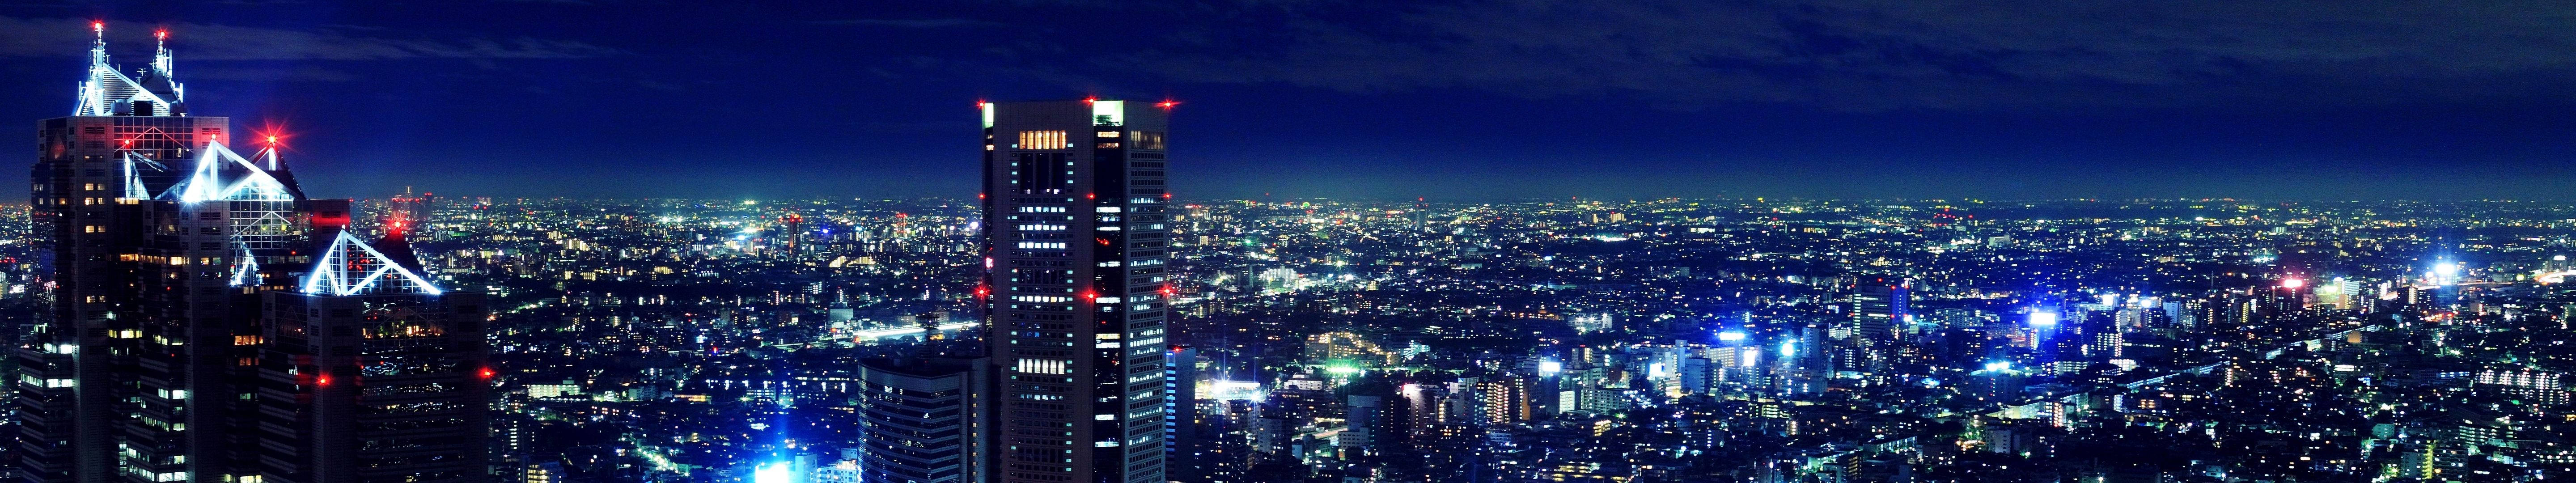 3 Monitor Tokyo Night City Background